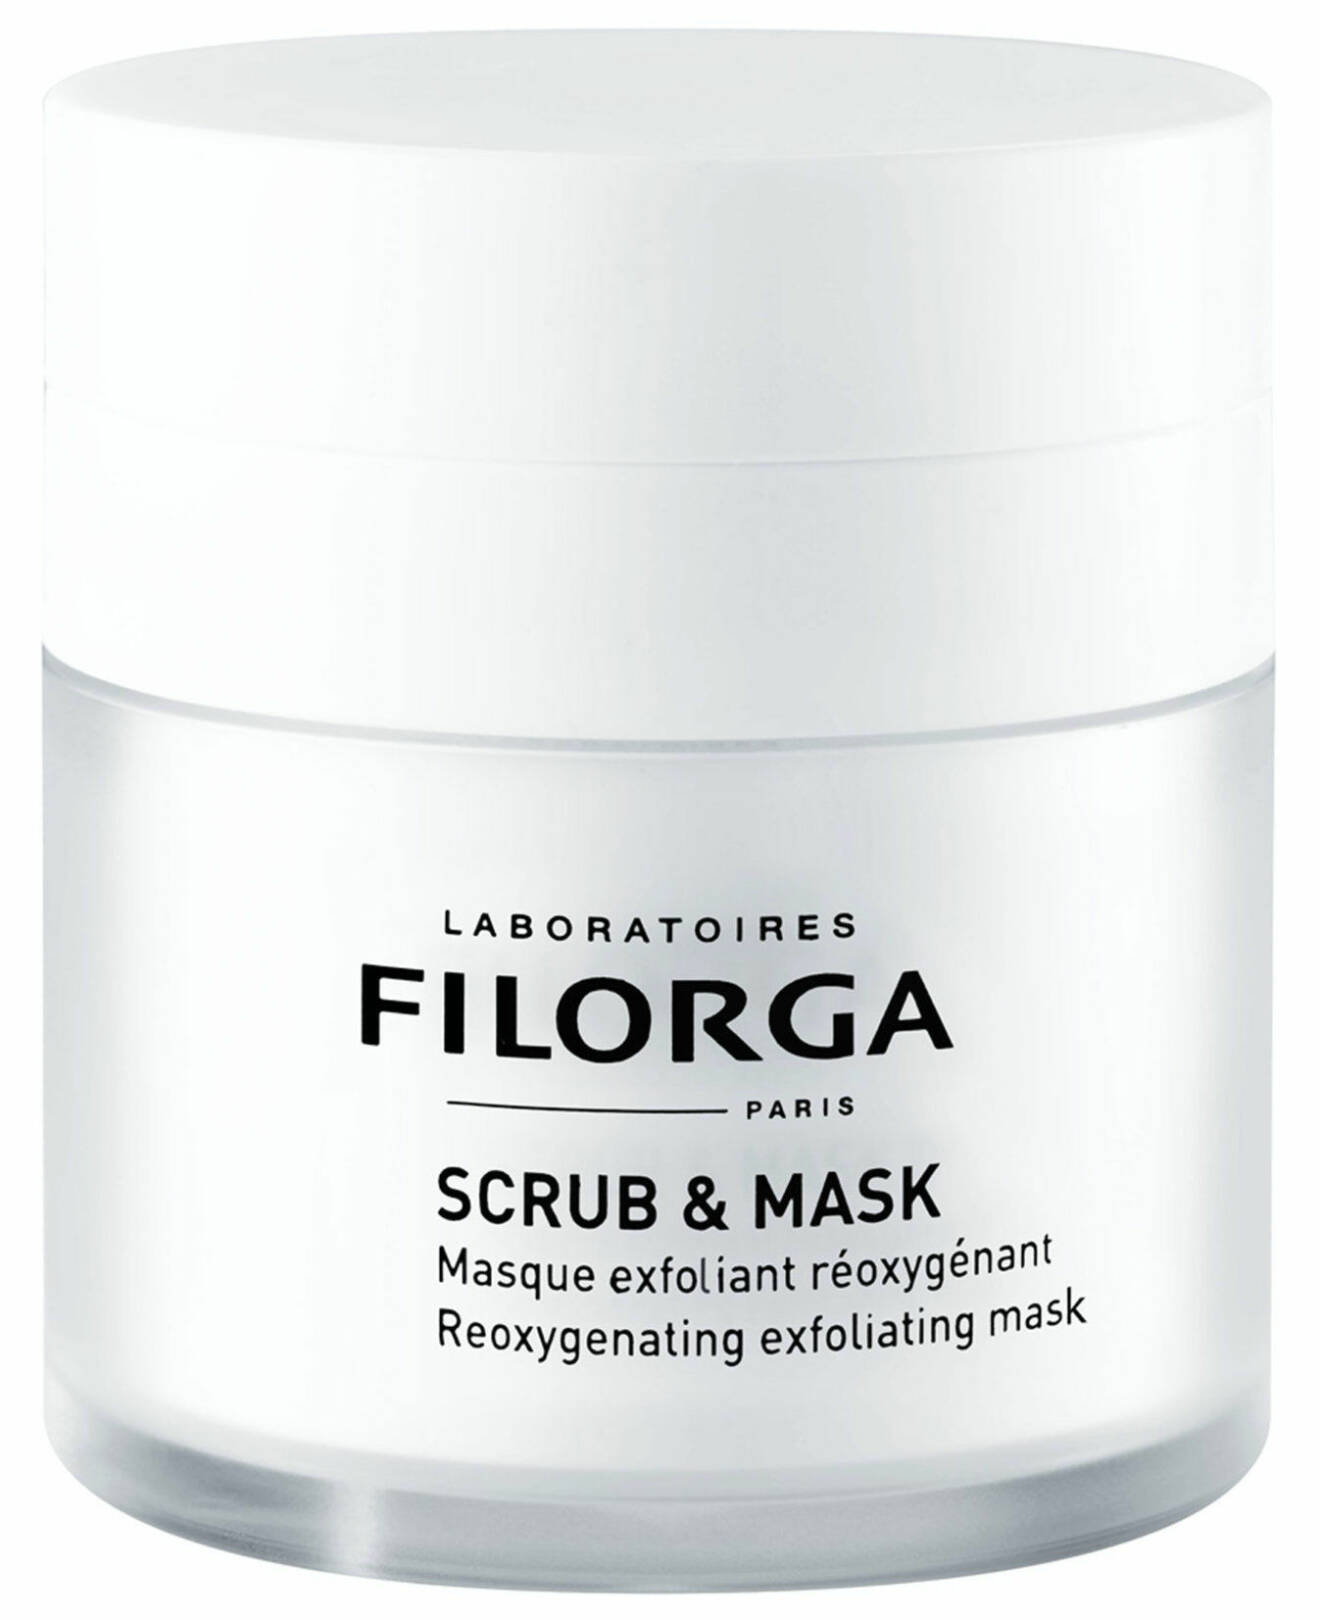 Exfolierande scrub and mask från Filorga.